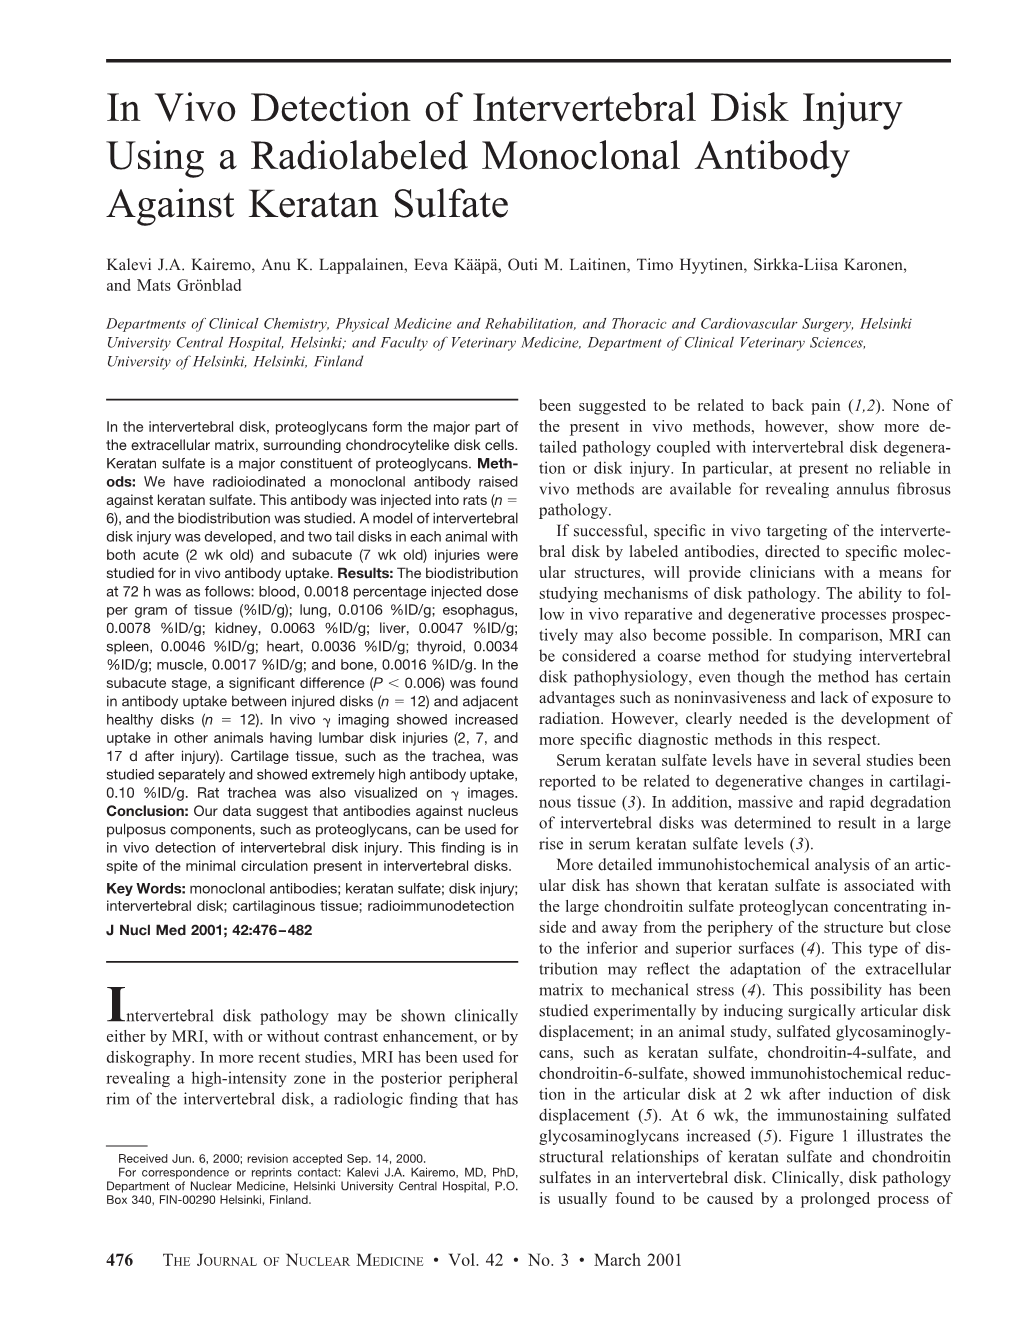 In Vivo Detection of Intervertebral Disk Injury Using a Radiolabeled Monoclonal Antibody Against Keratan Sulfate